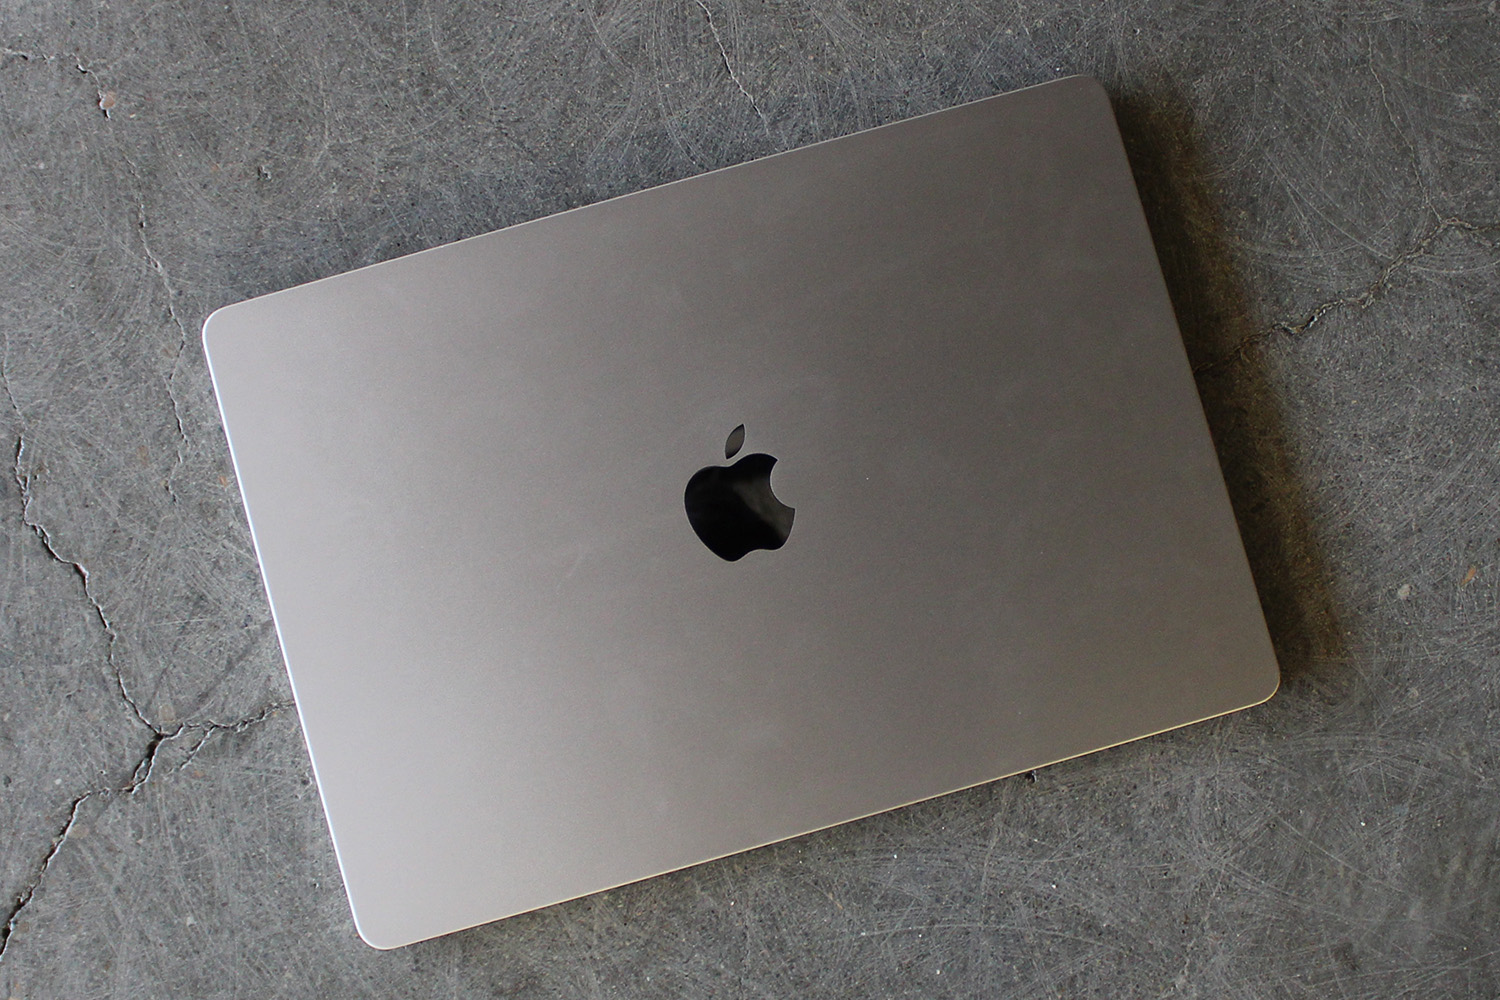 MacBook Air 15-inch vs. MacBook Air 13-inch: which to buy